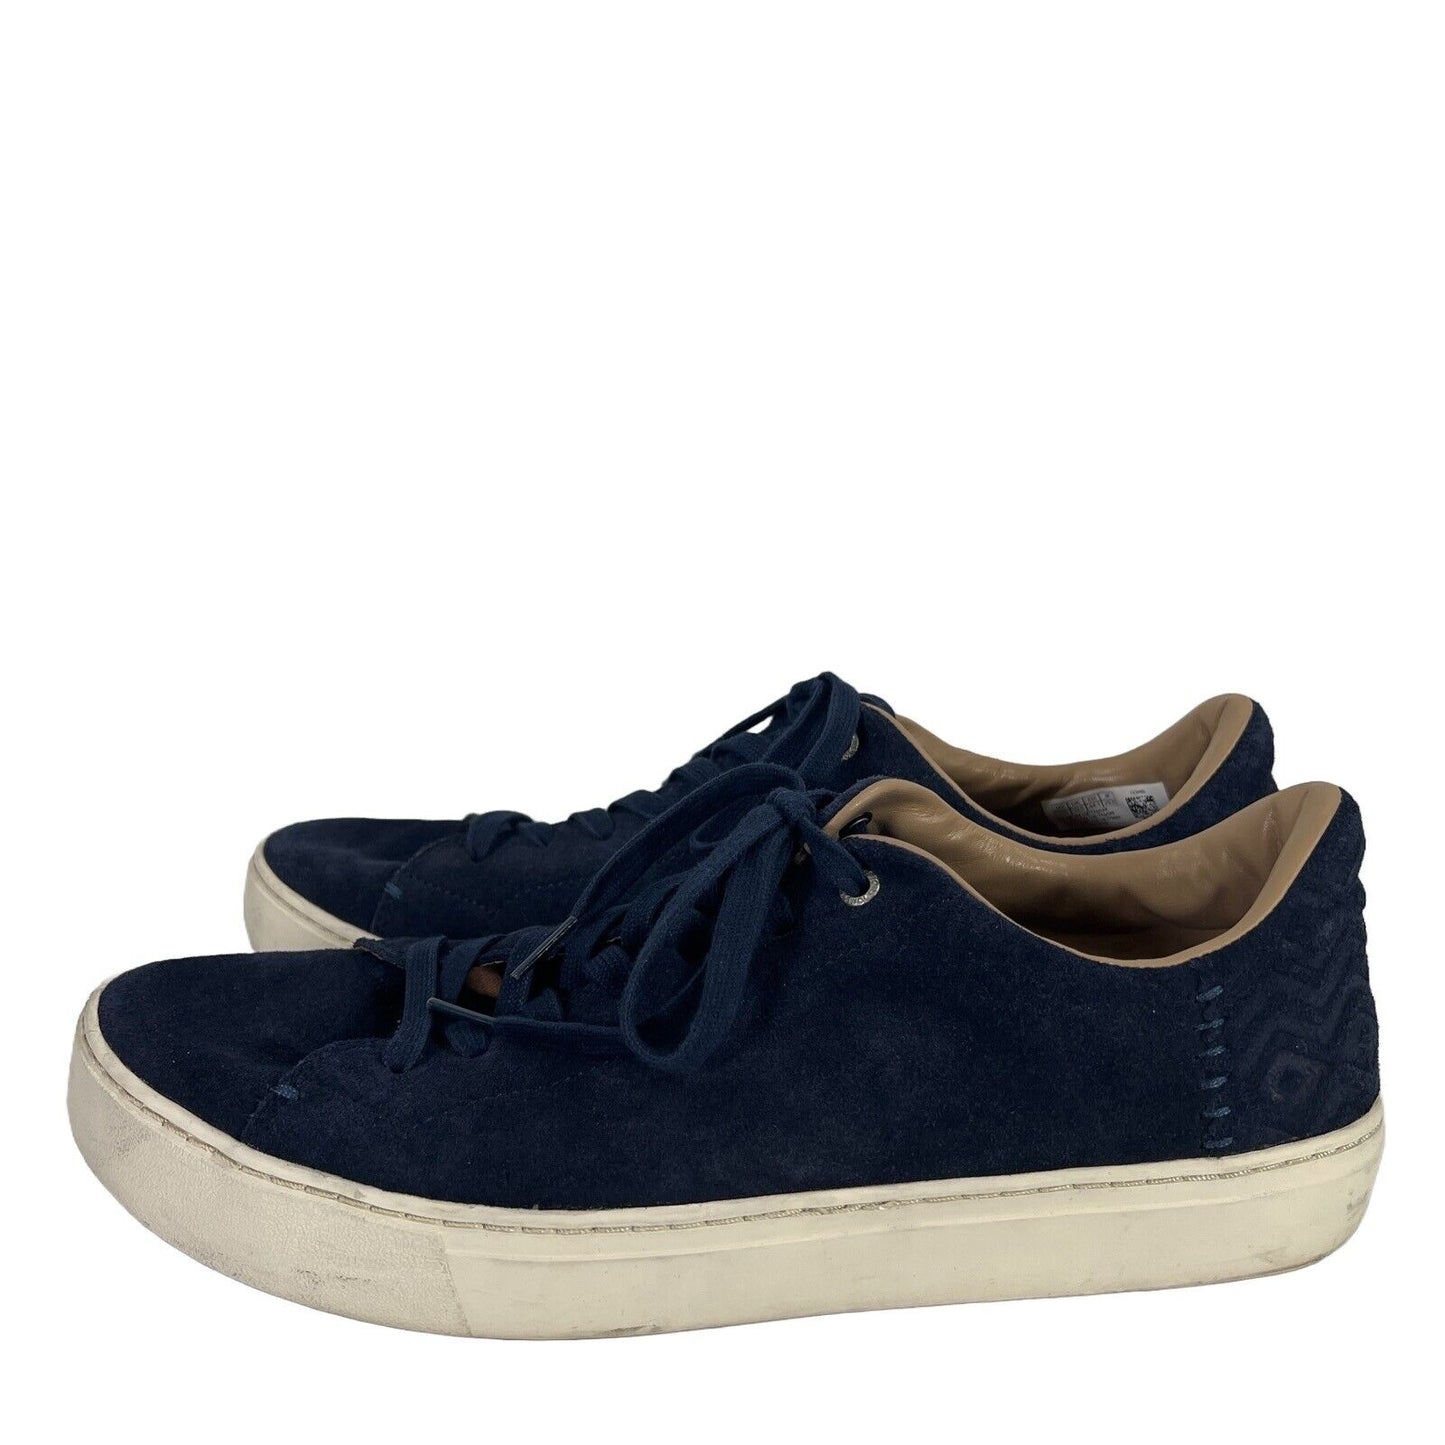 Toms Men's Navy Blue Suede Lenox Sneakers Shoes - 11.5